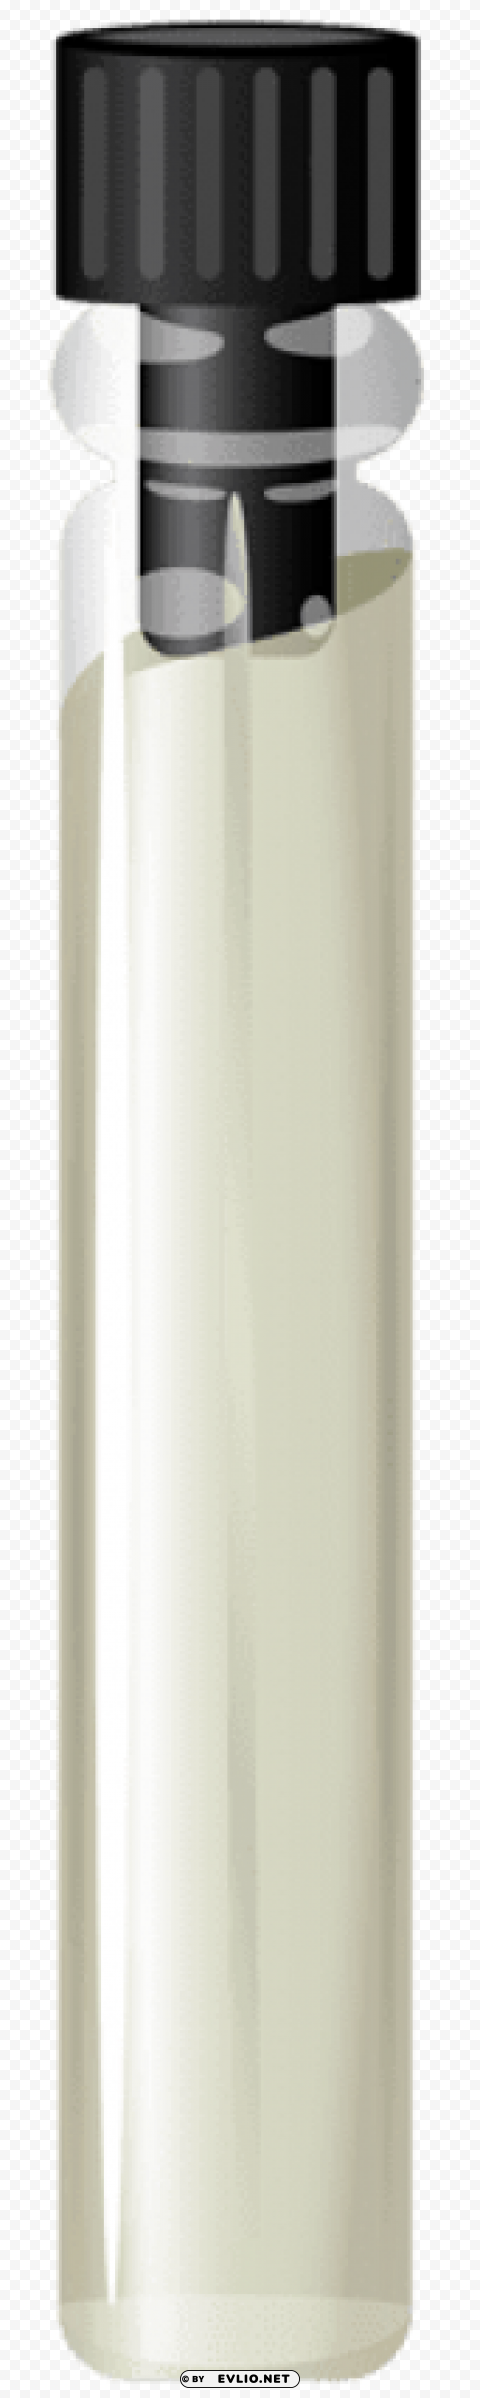 perfume sampler vials Transparent background PNG stockpile assortment